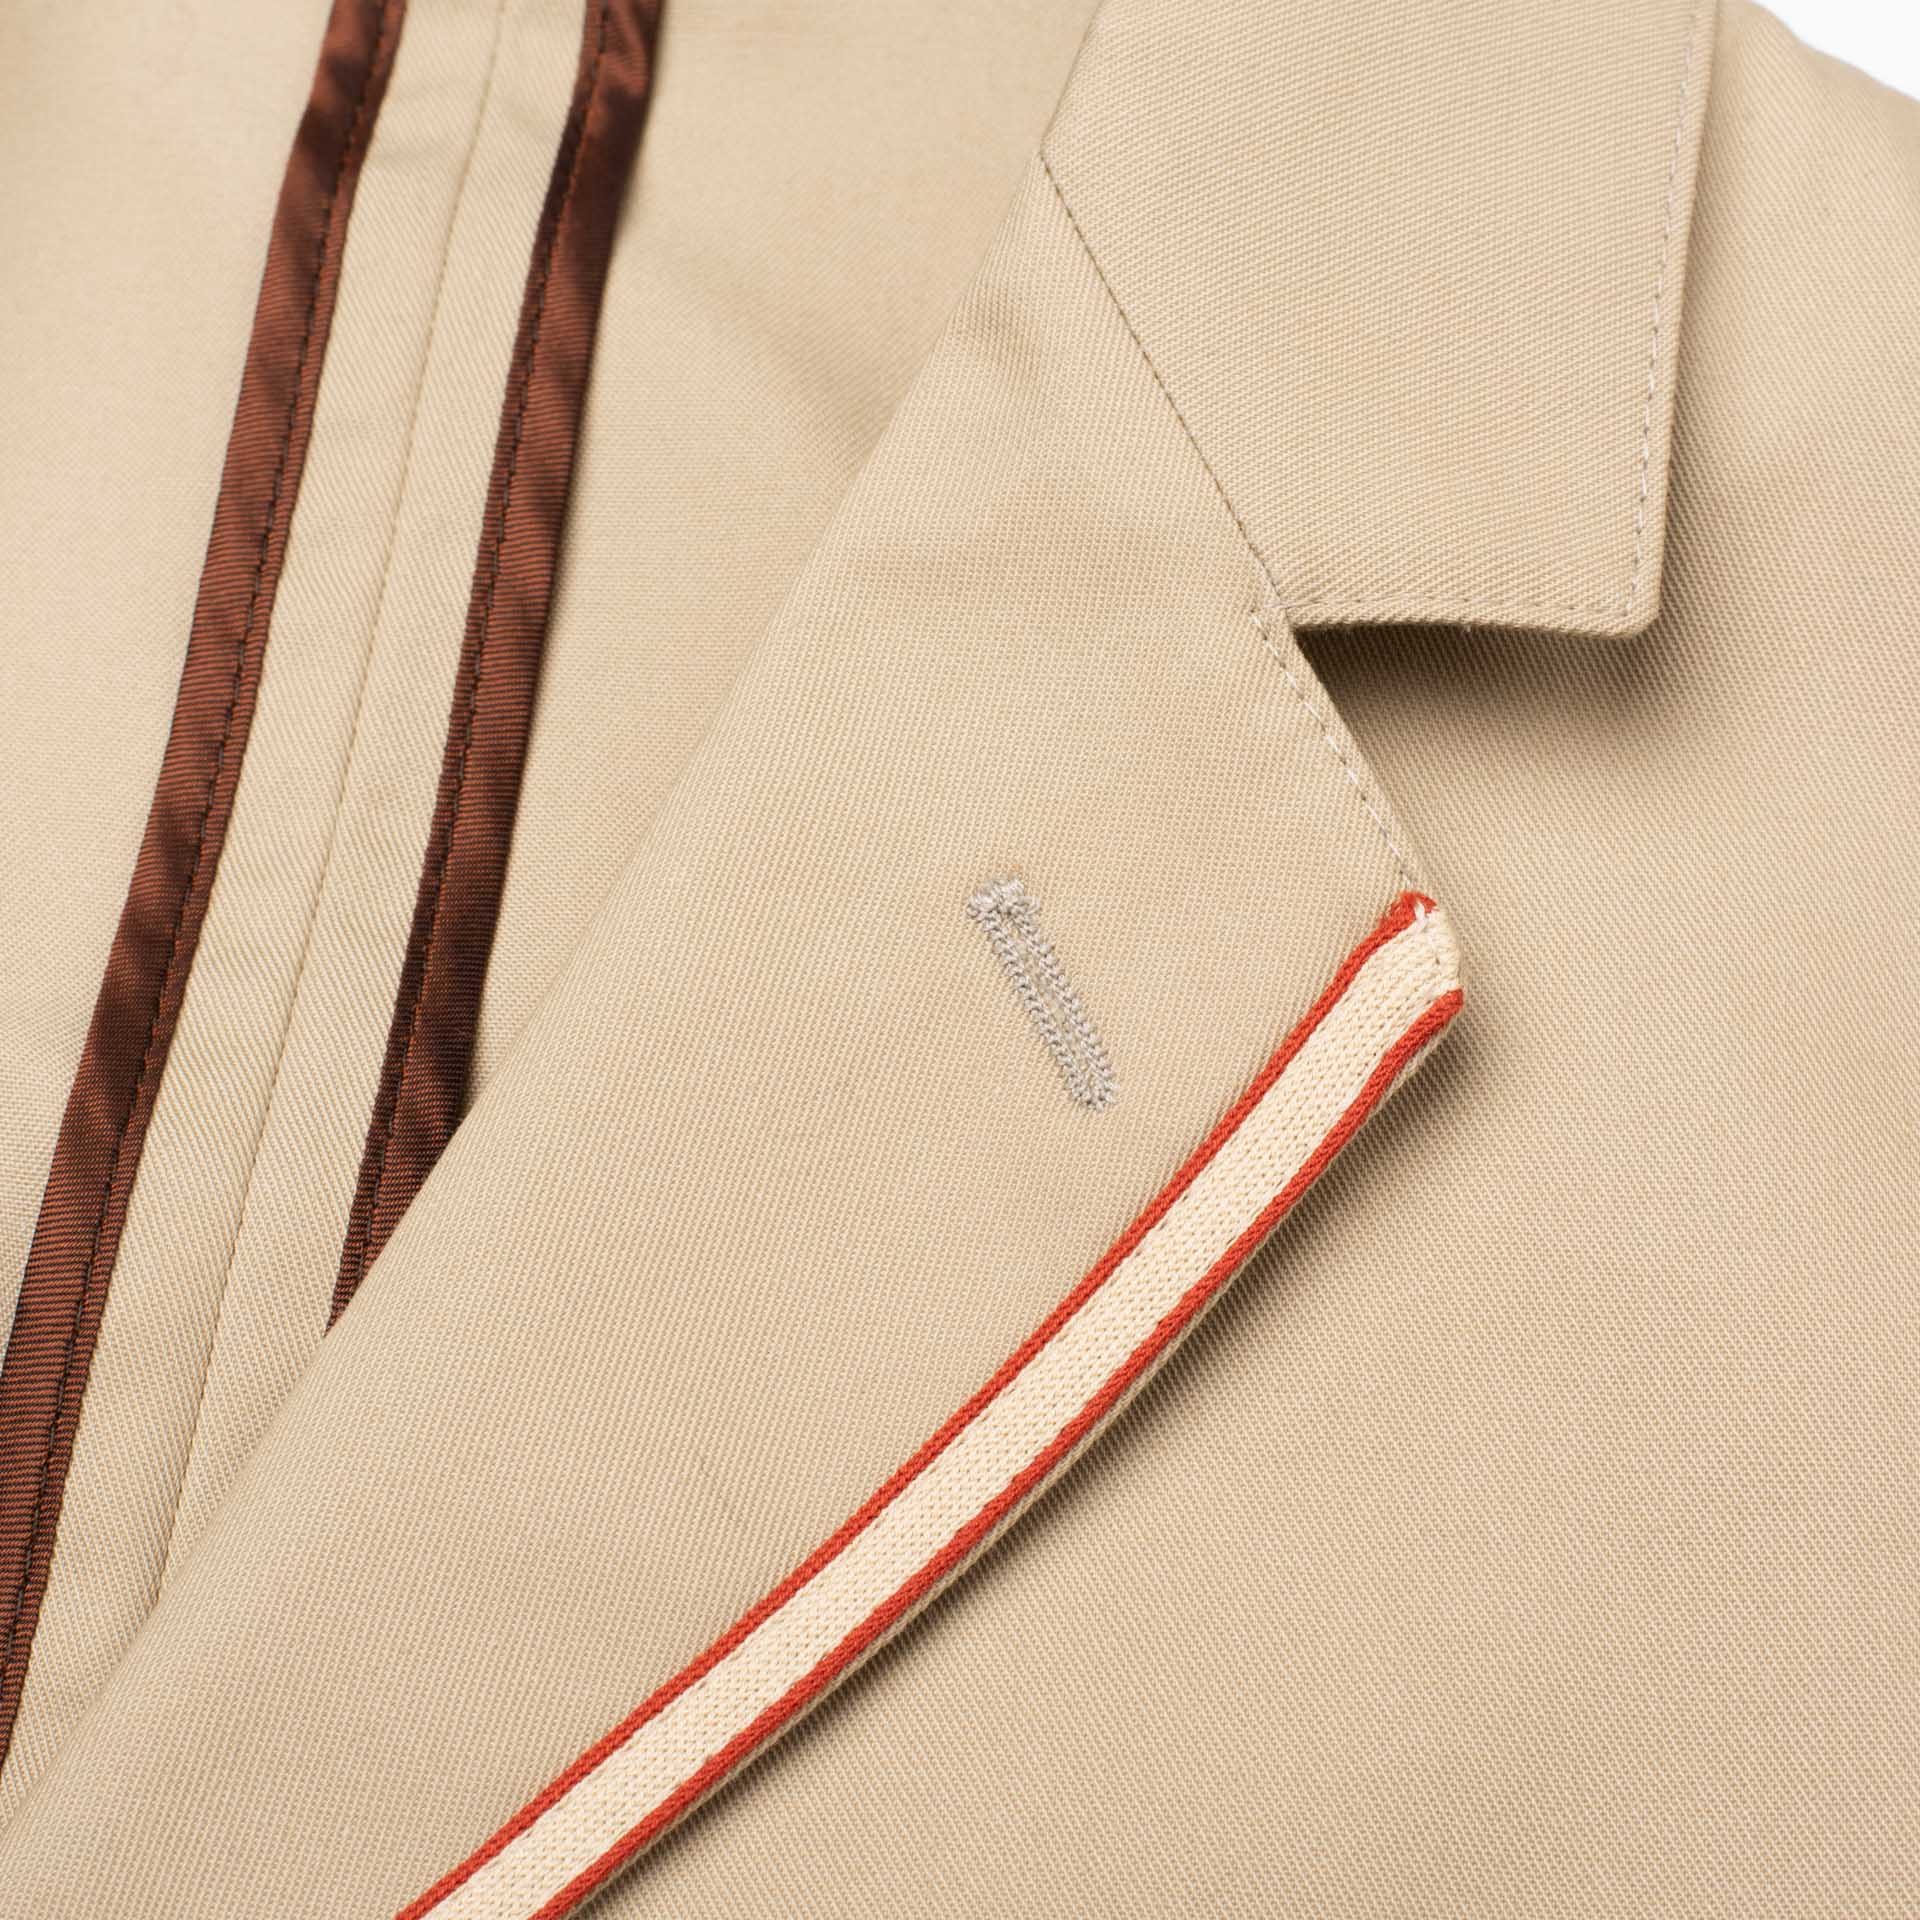 BOGLIOLI Milano Galleria "73" Beige Cotton Blend Unlined Jacket EU 50 NEW US 40 BOGLIOLI